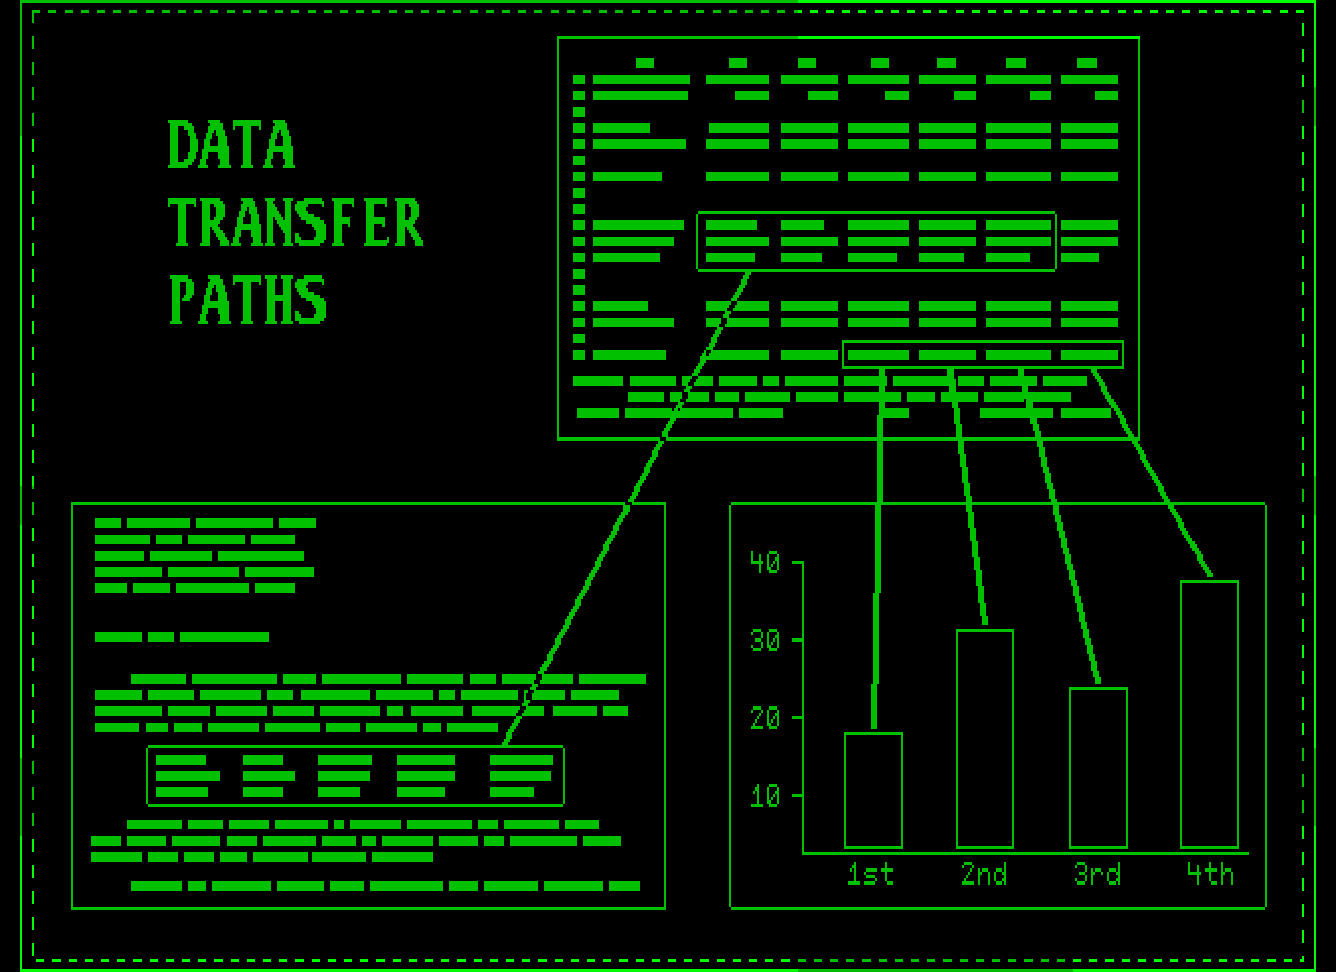 Demo Data Transfers